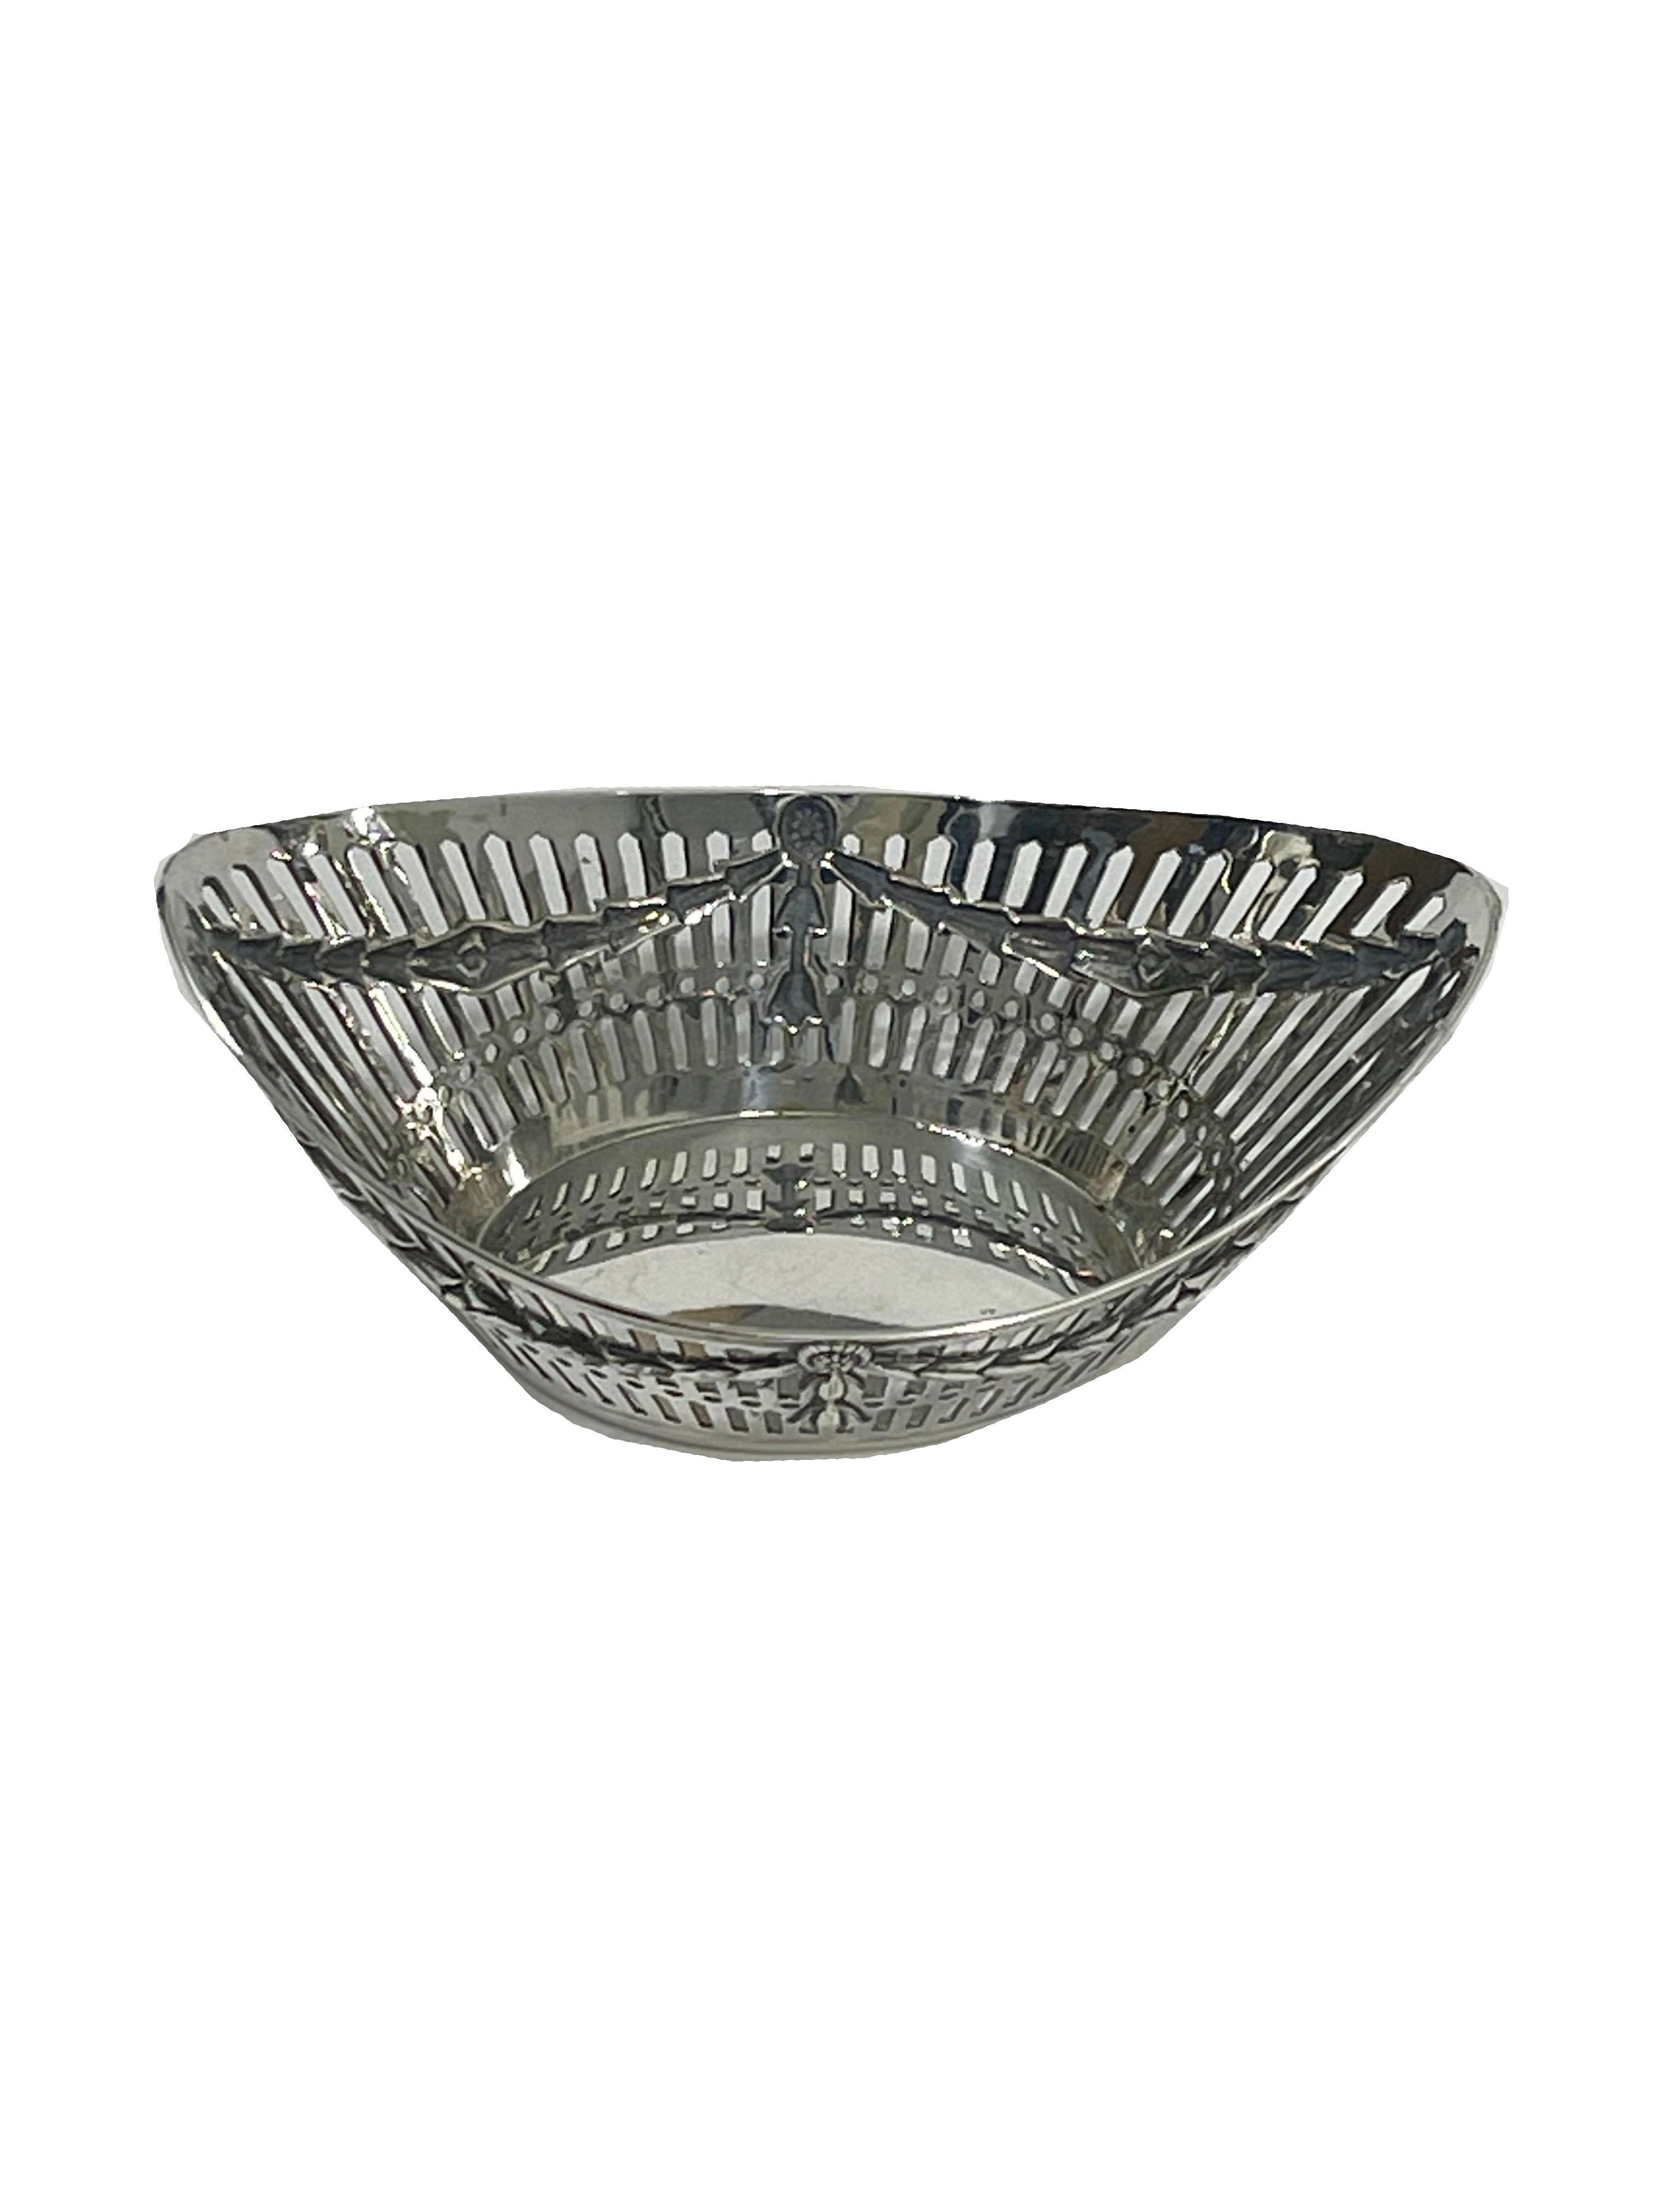 Dutch Silver Small Bonbon Basket, by Gerardus Schoorl, 1914 In Good Condition For Sale In Delft, NL